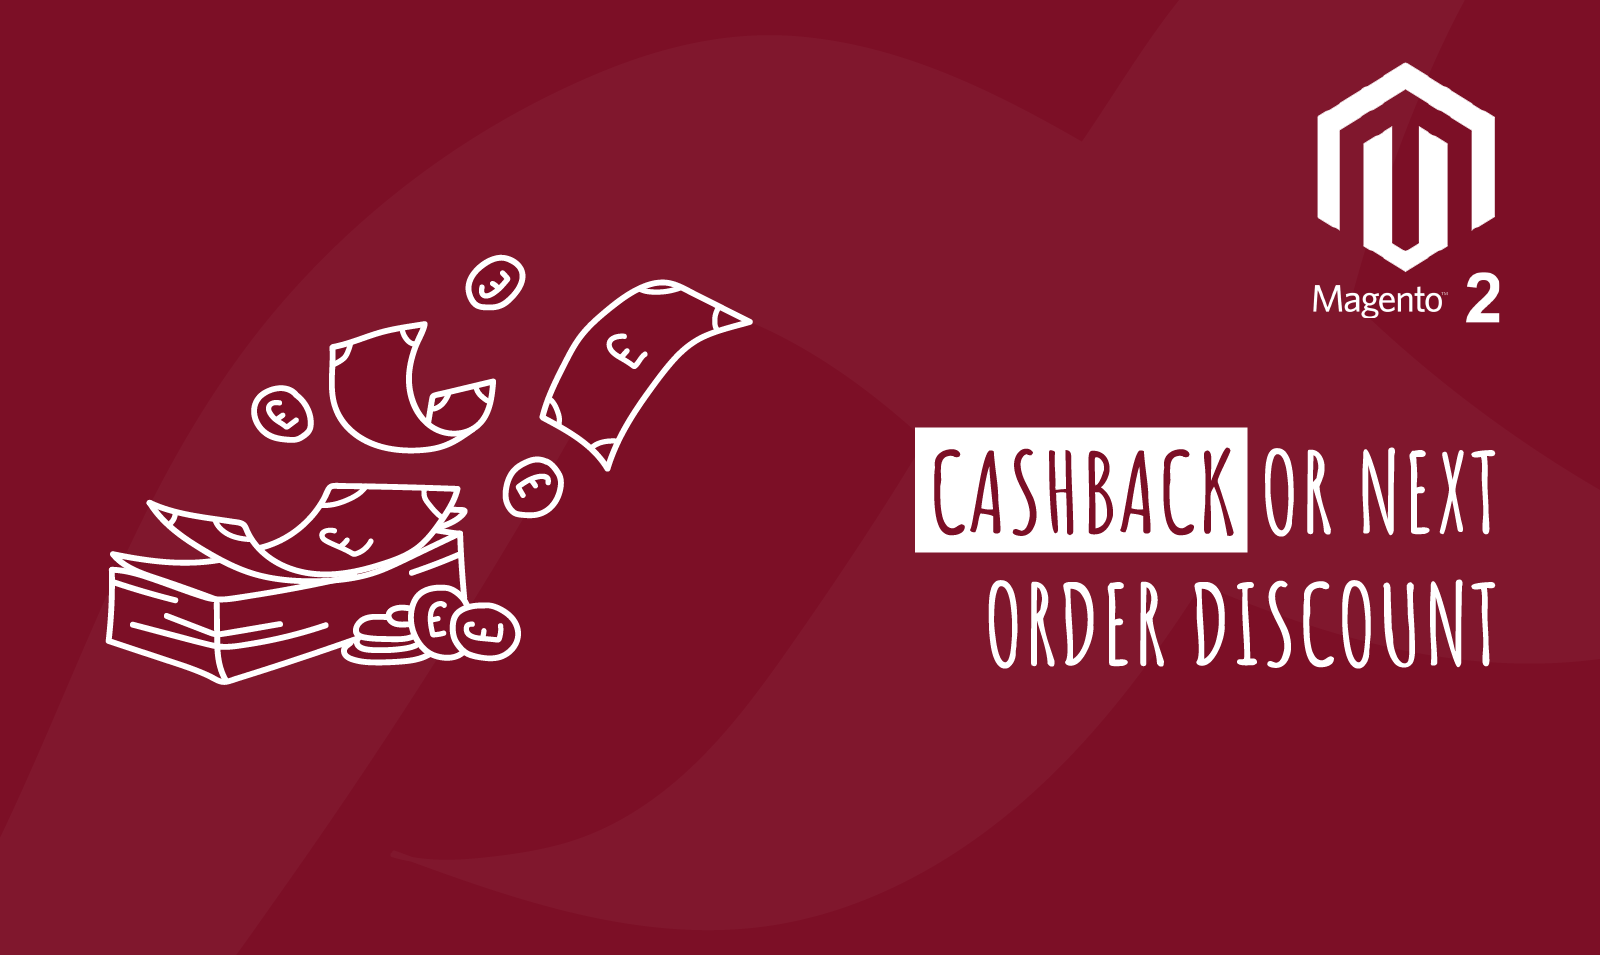 Magento 2 - Cashback Offer or Discount